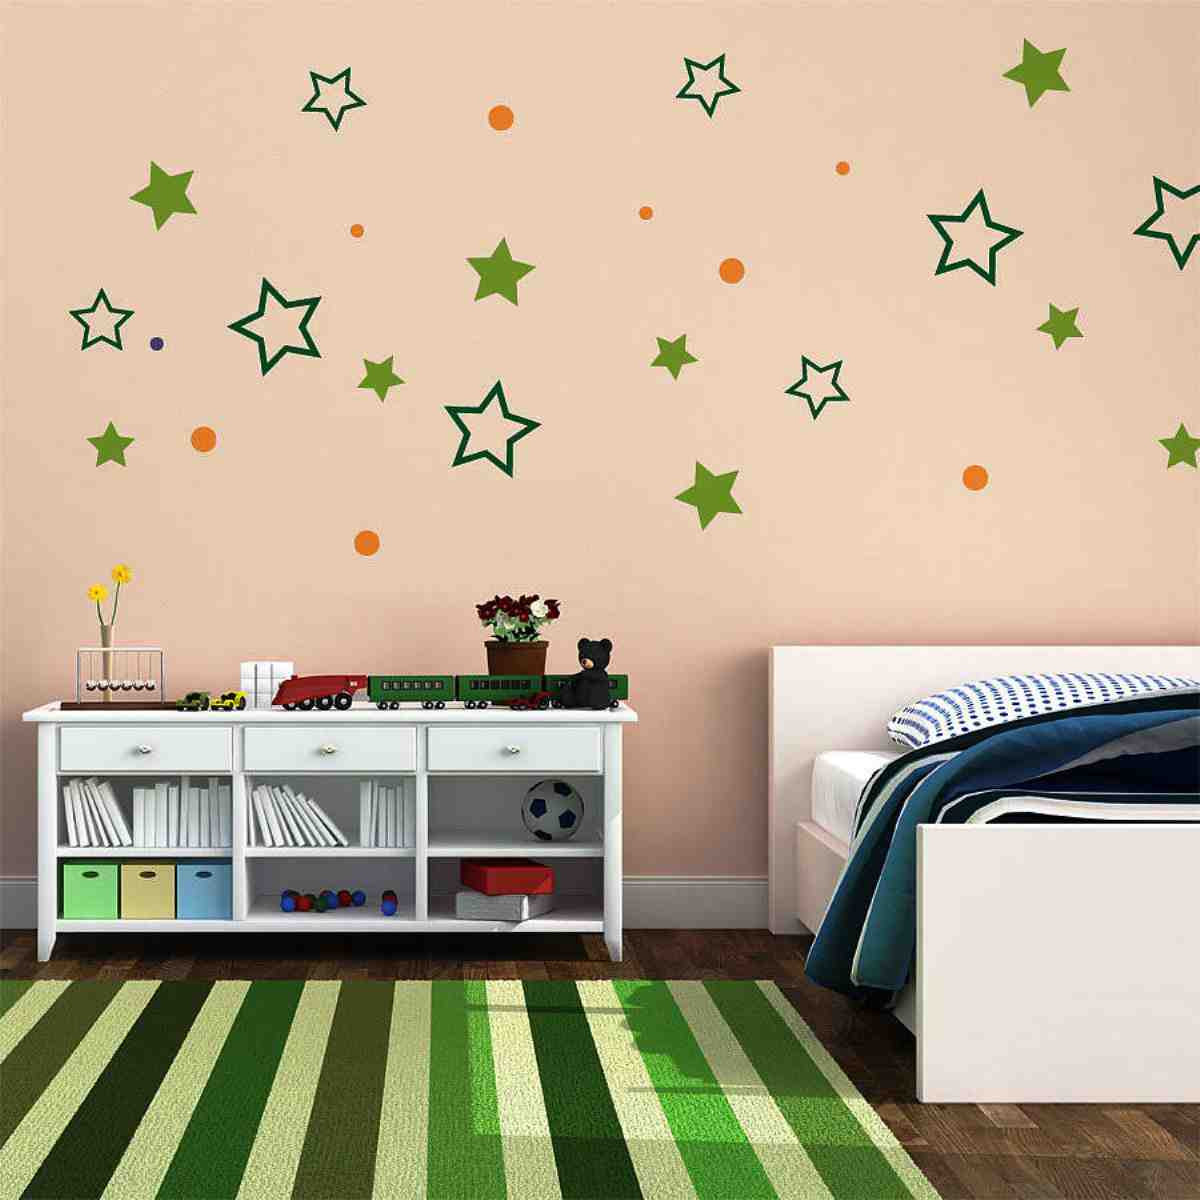 DIY Wall Decor Ideas For Bedroom
 Diy Wall Decor Ideas for Bedroom Decor IdeasDecor Ideas